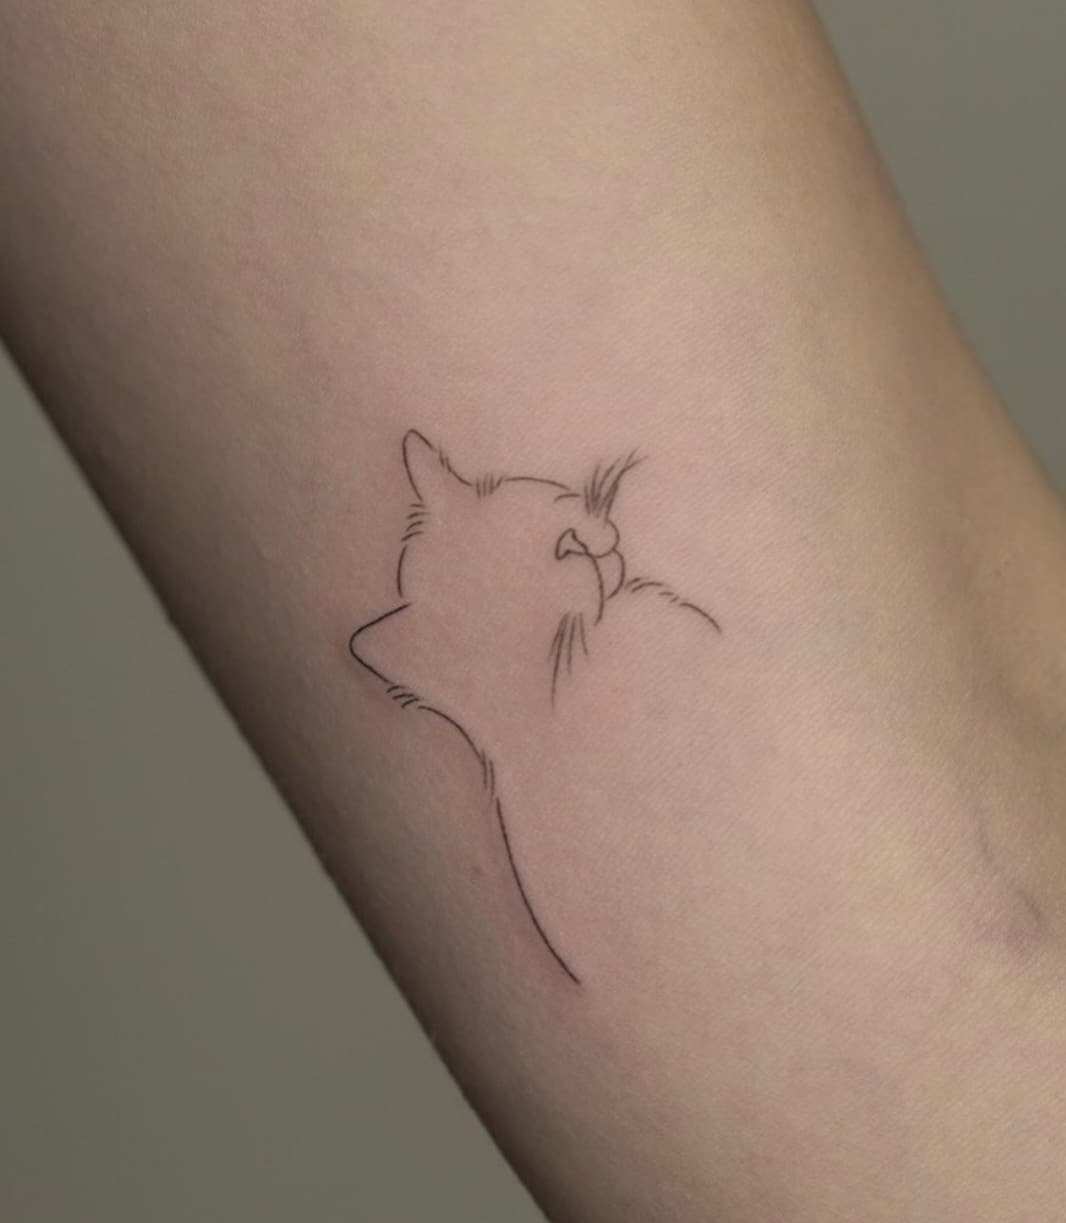 Tatuaje mini de un gato